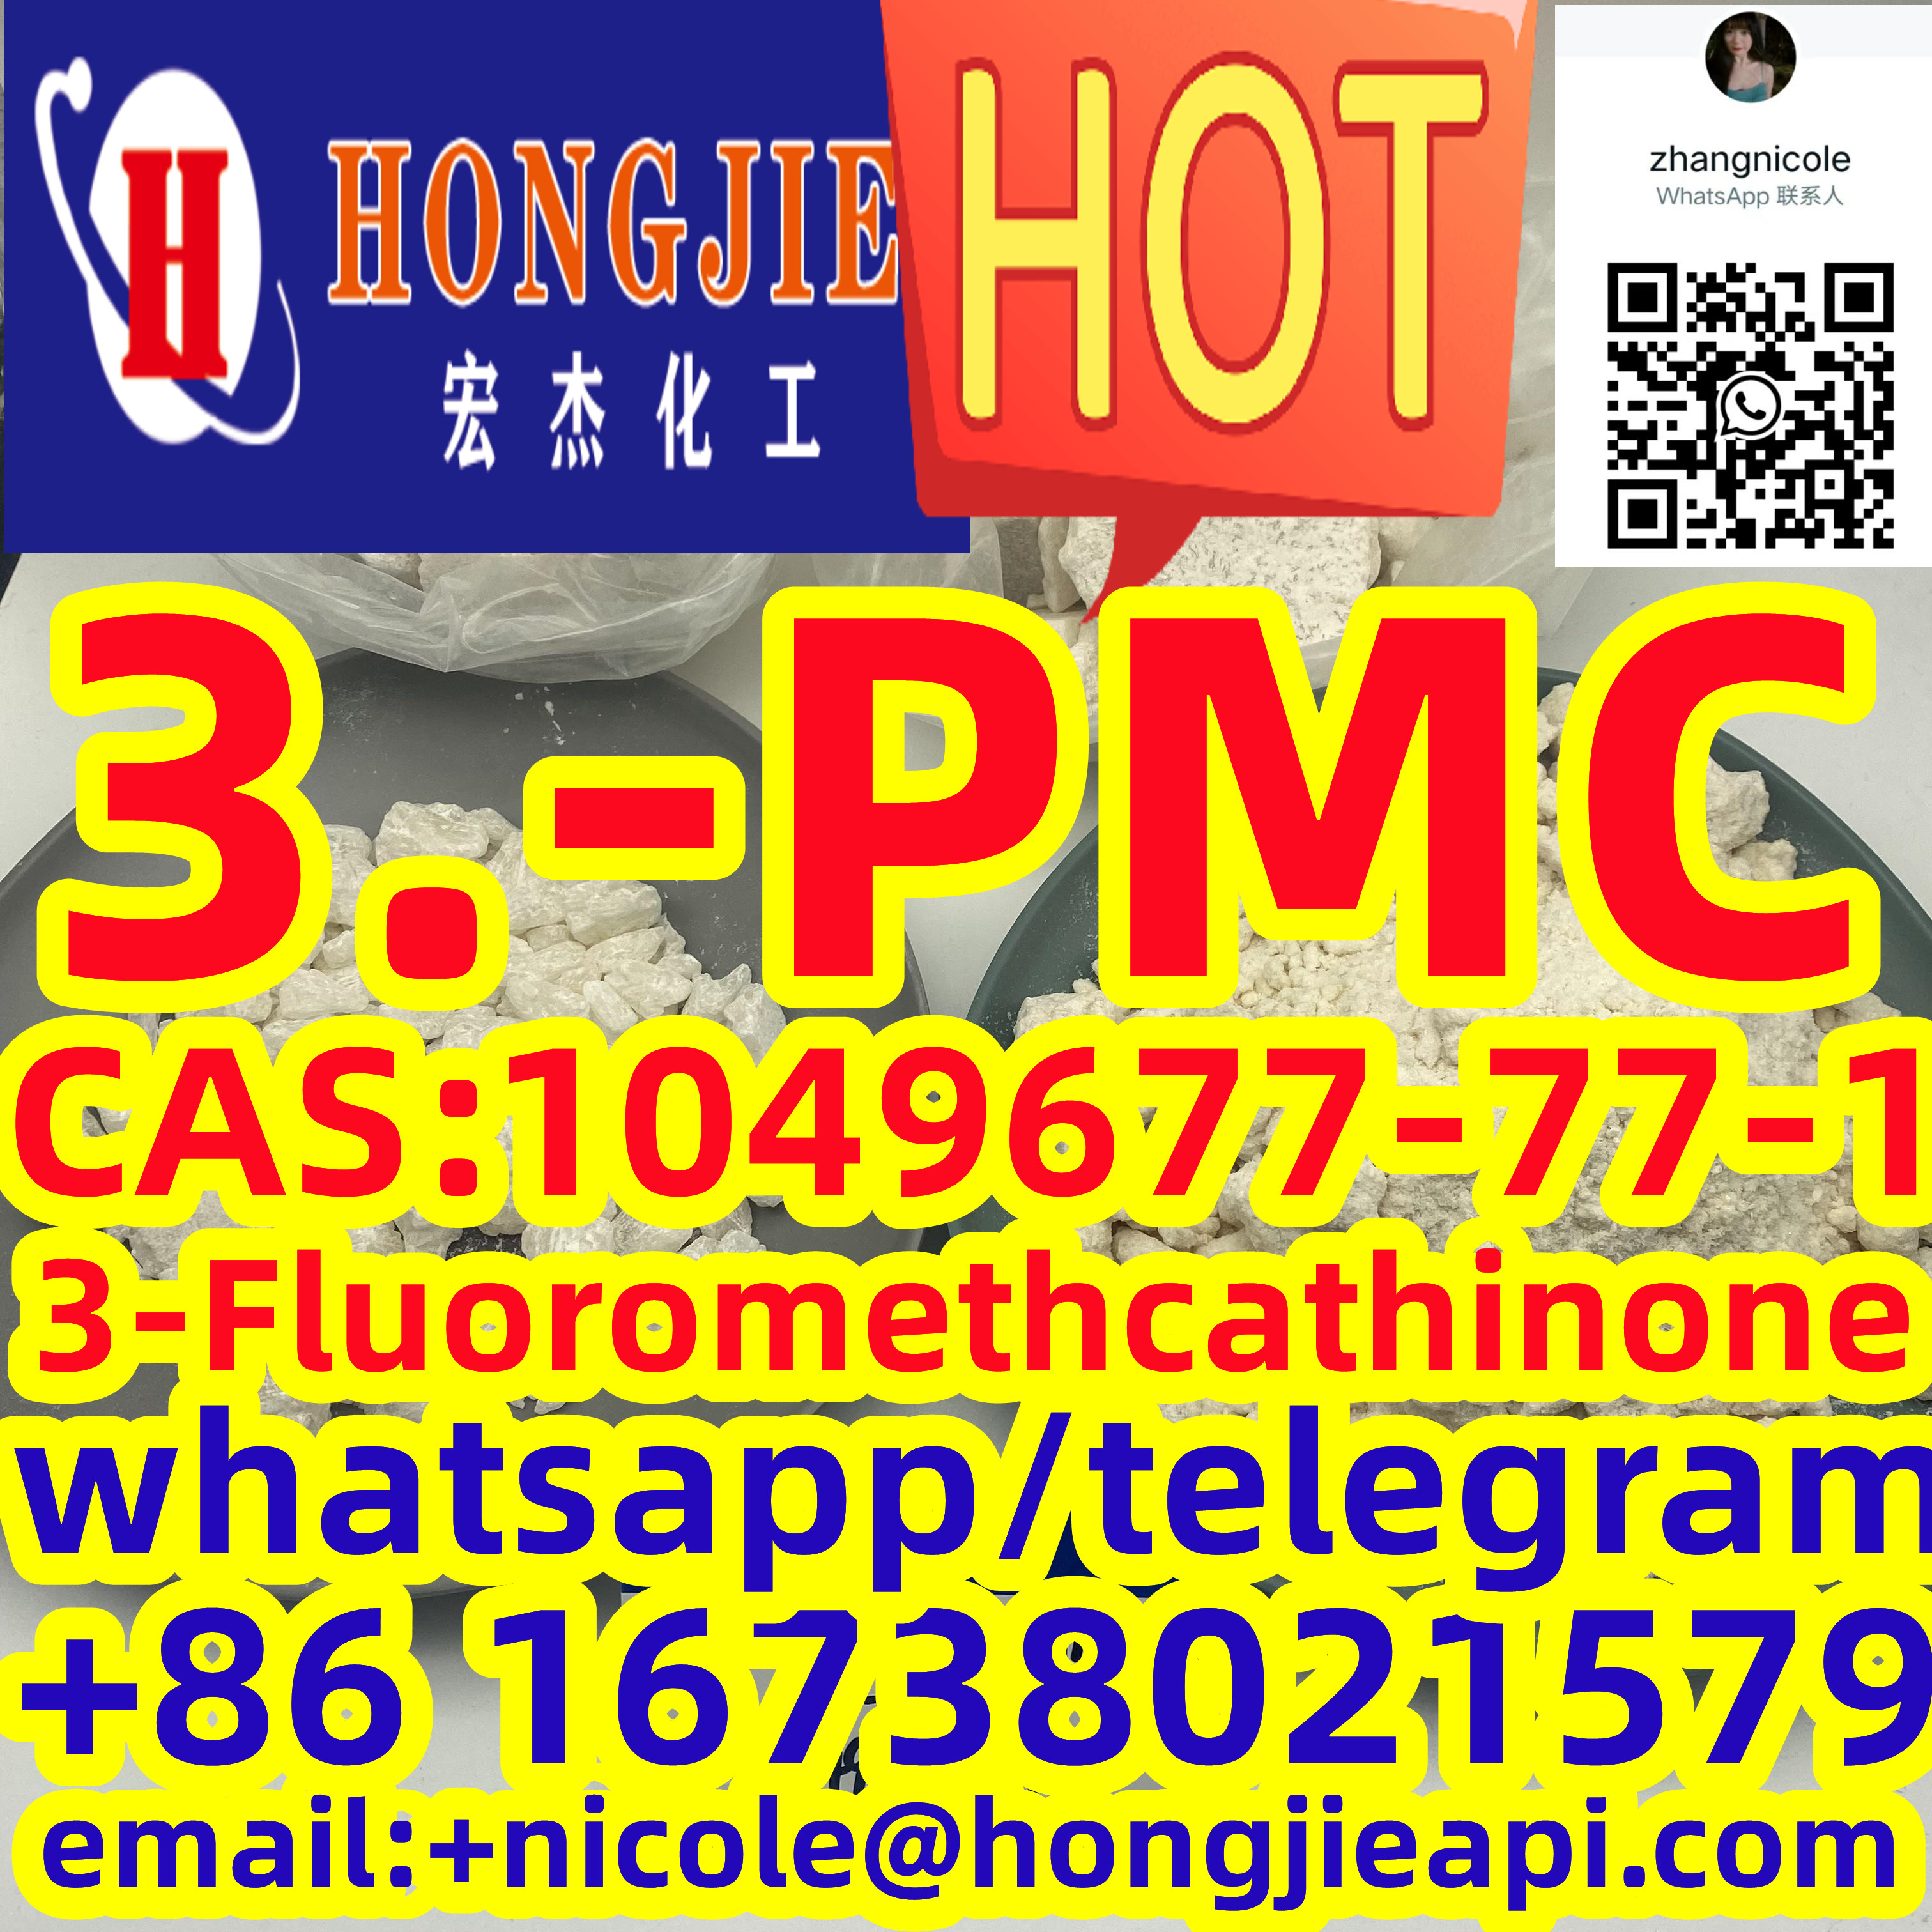 3-PMC 3-Fluoromethcathinone CAS:1049677-77-1